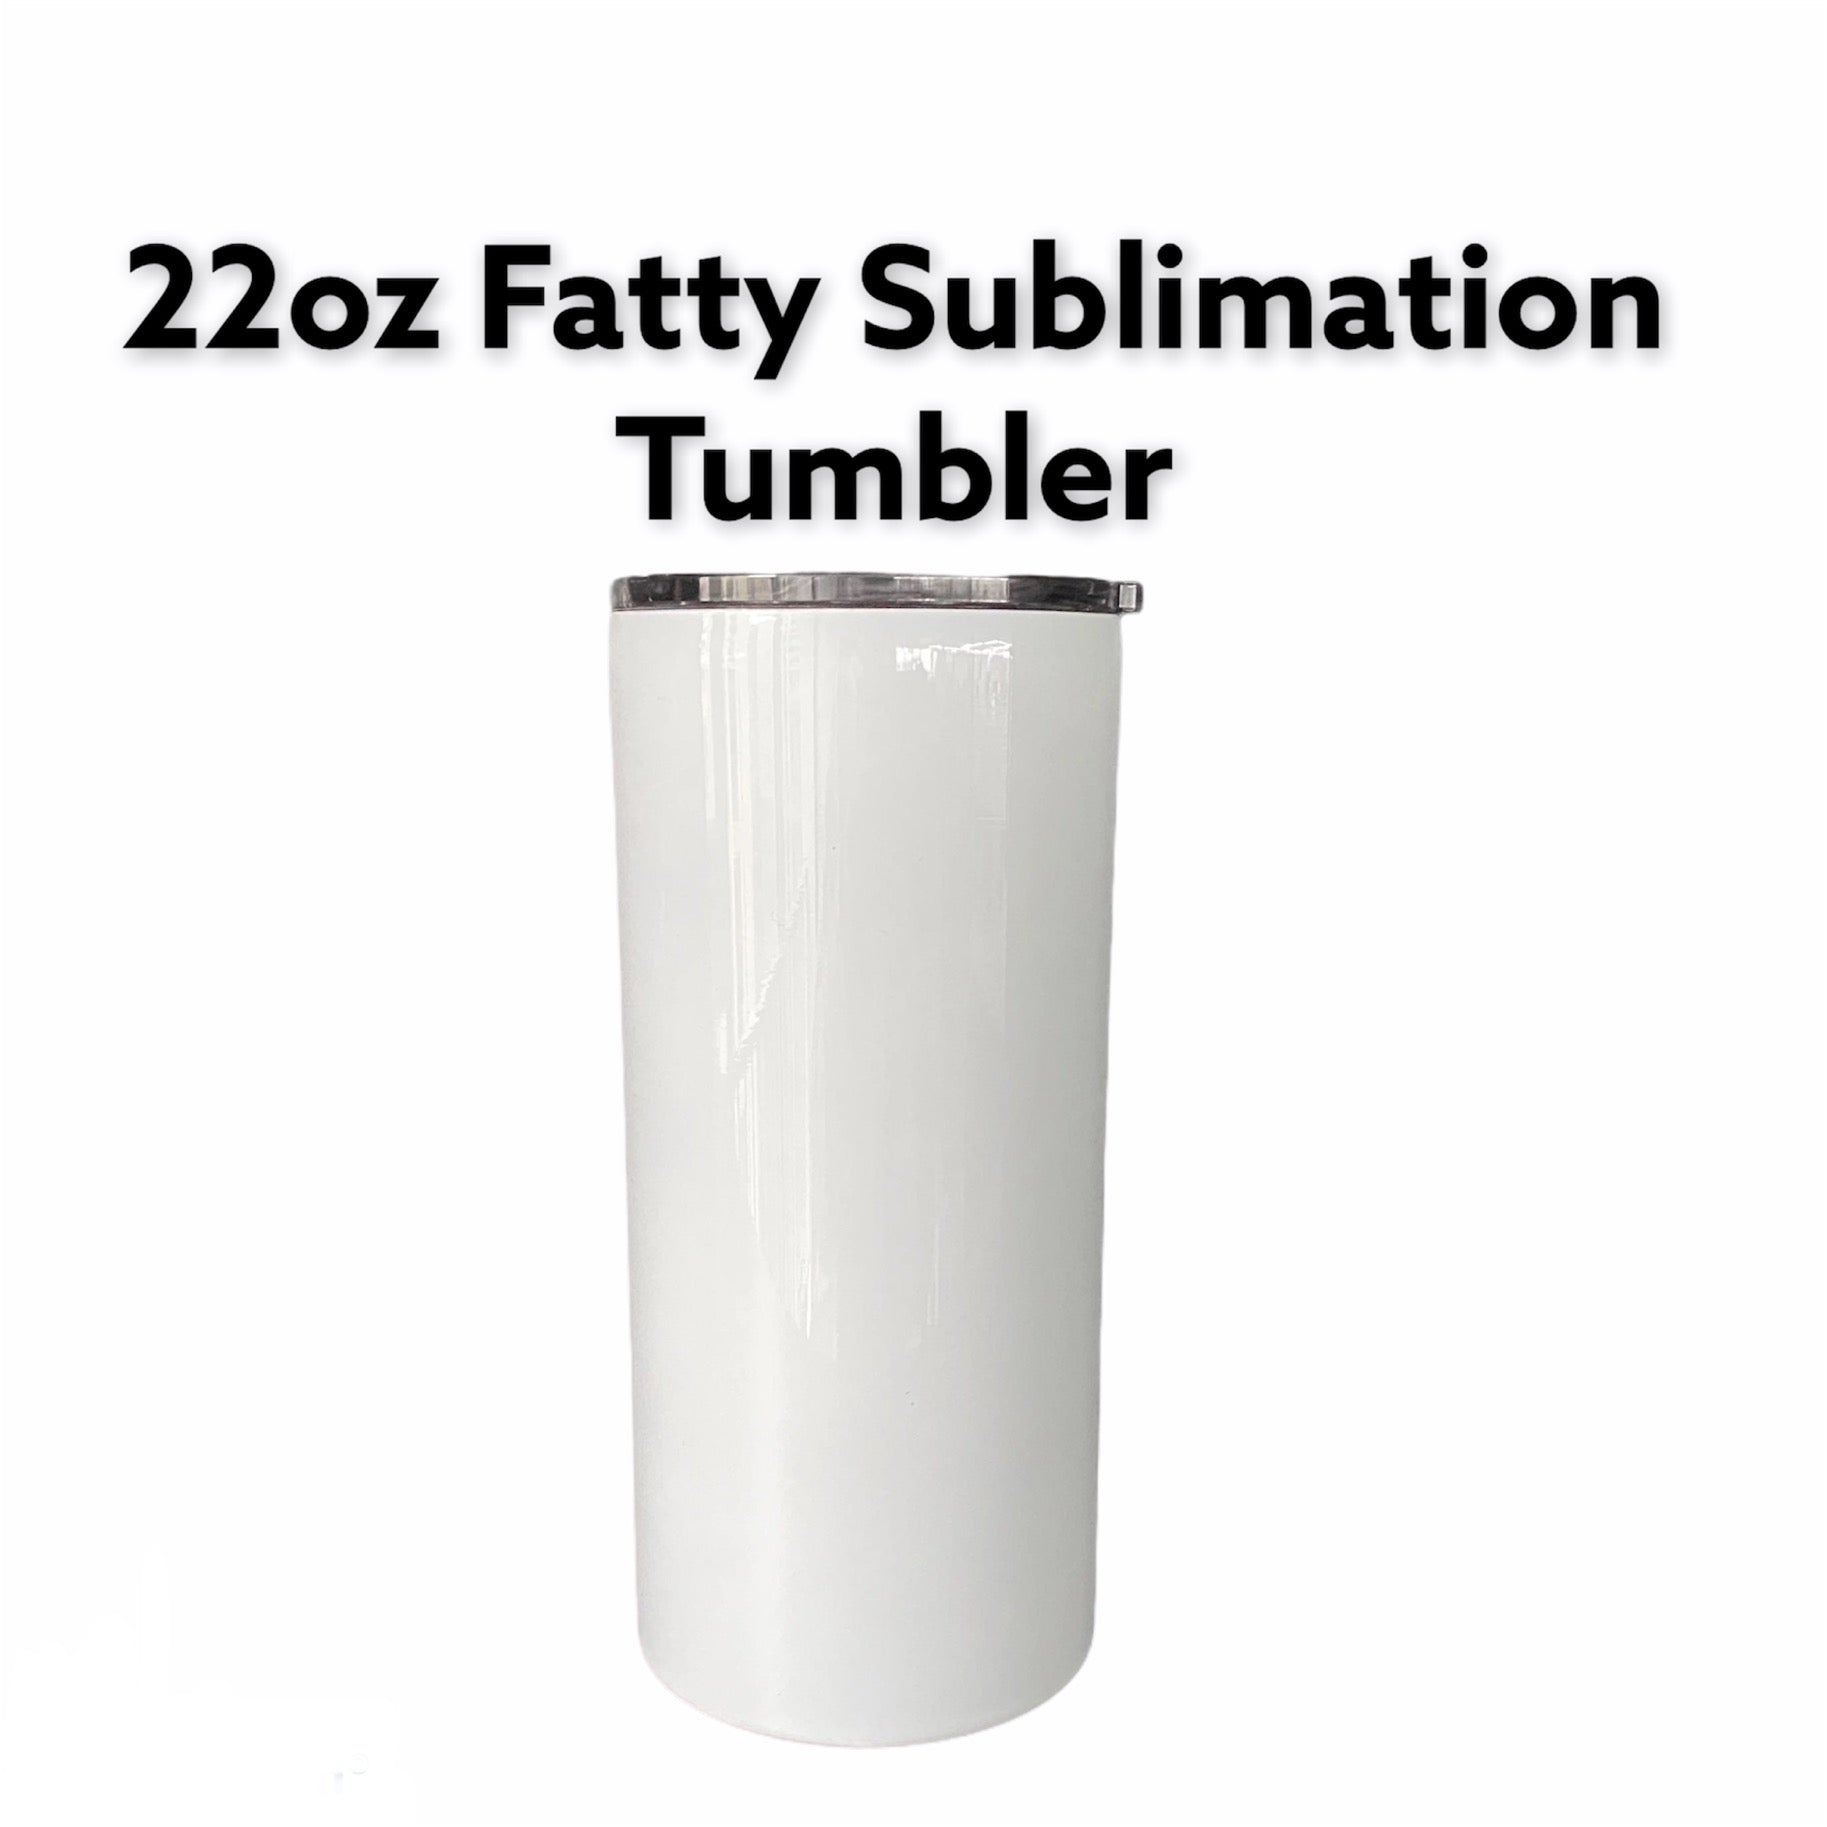 Sublimation Tumbler